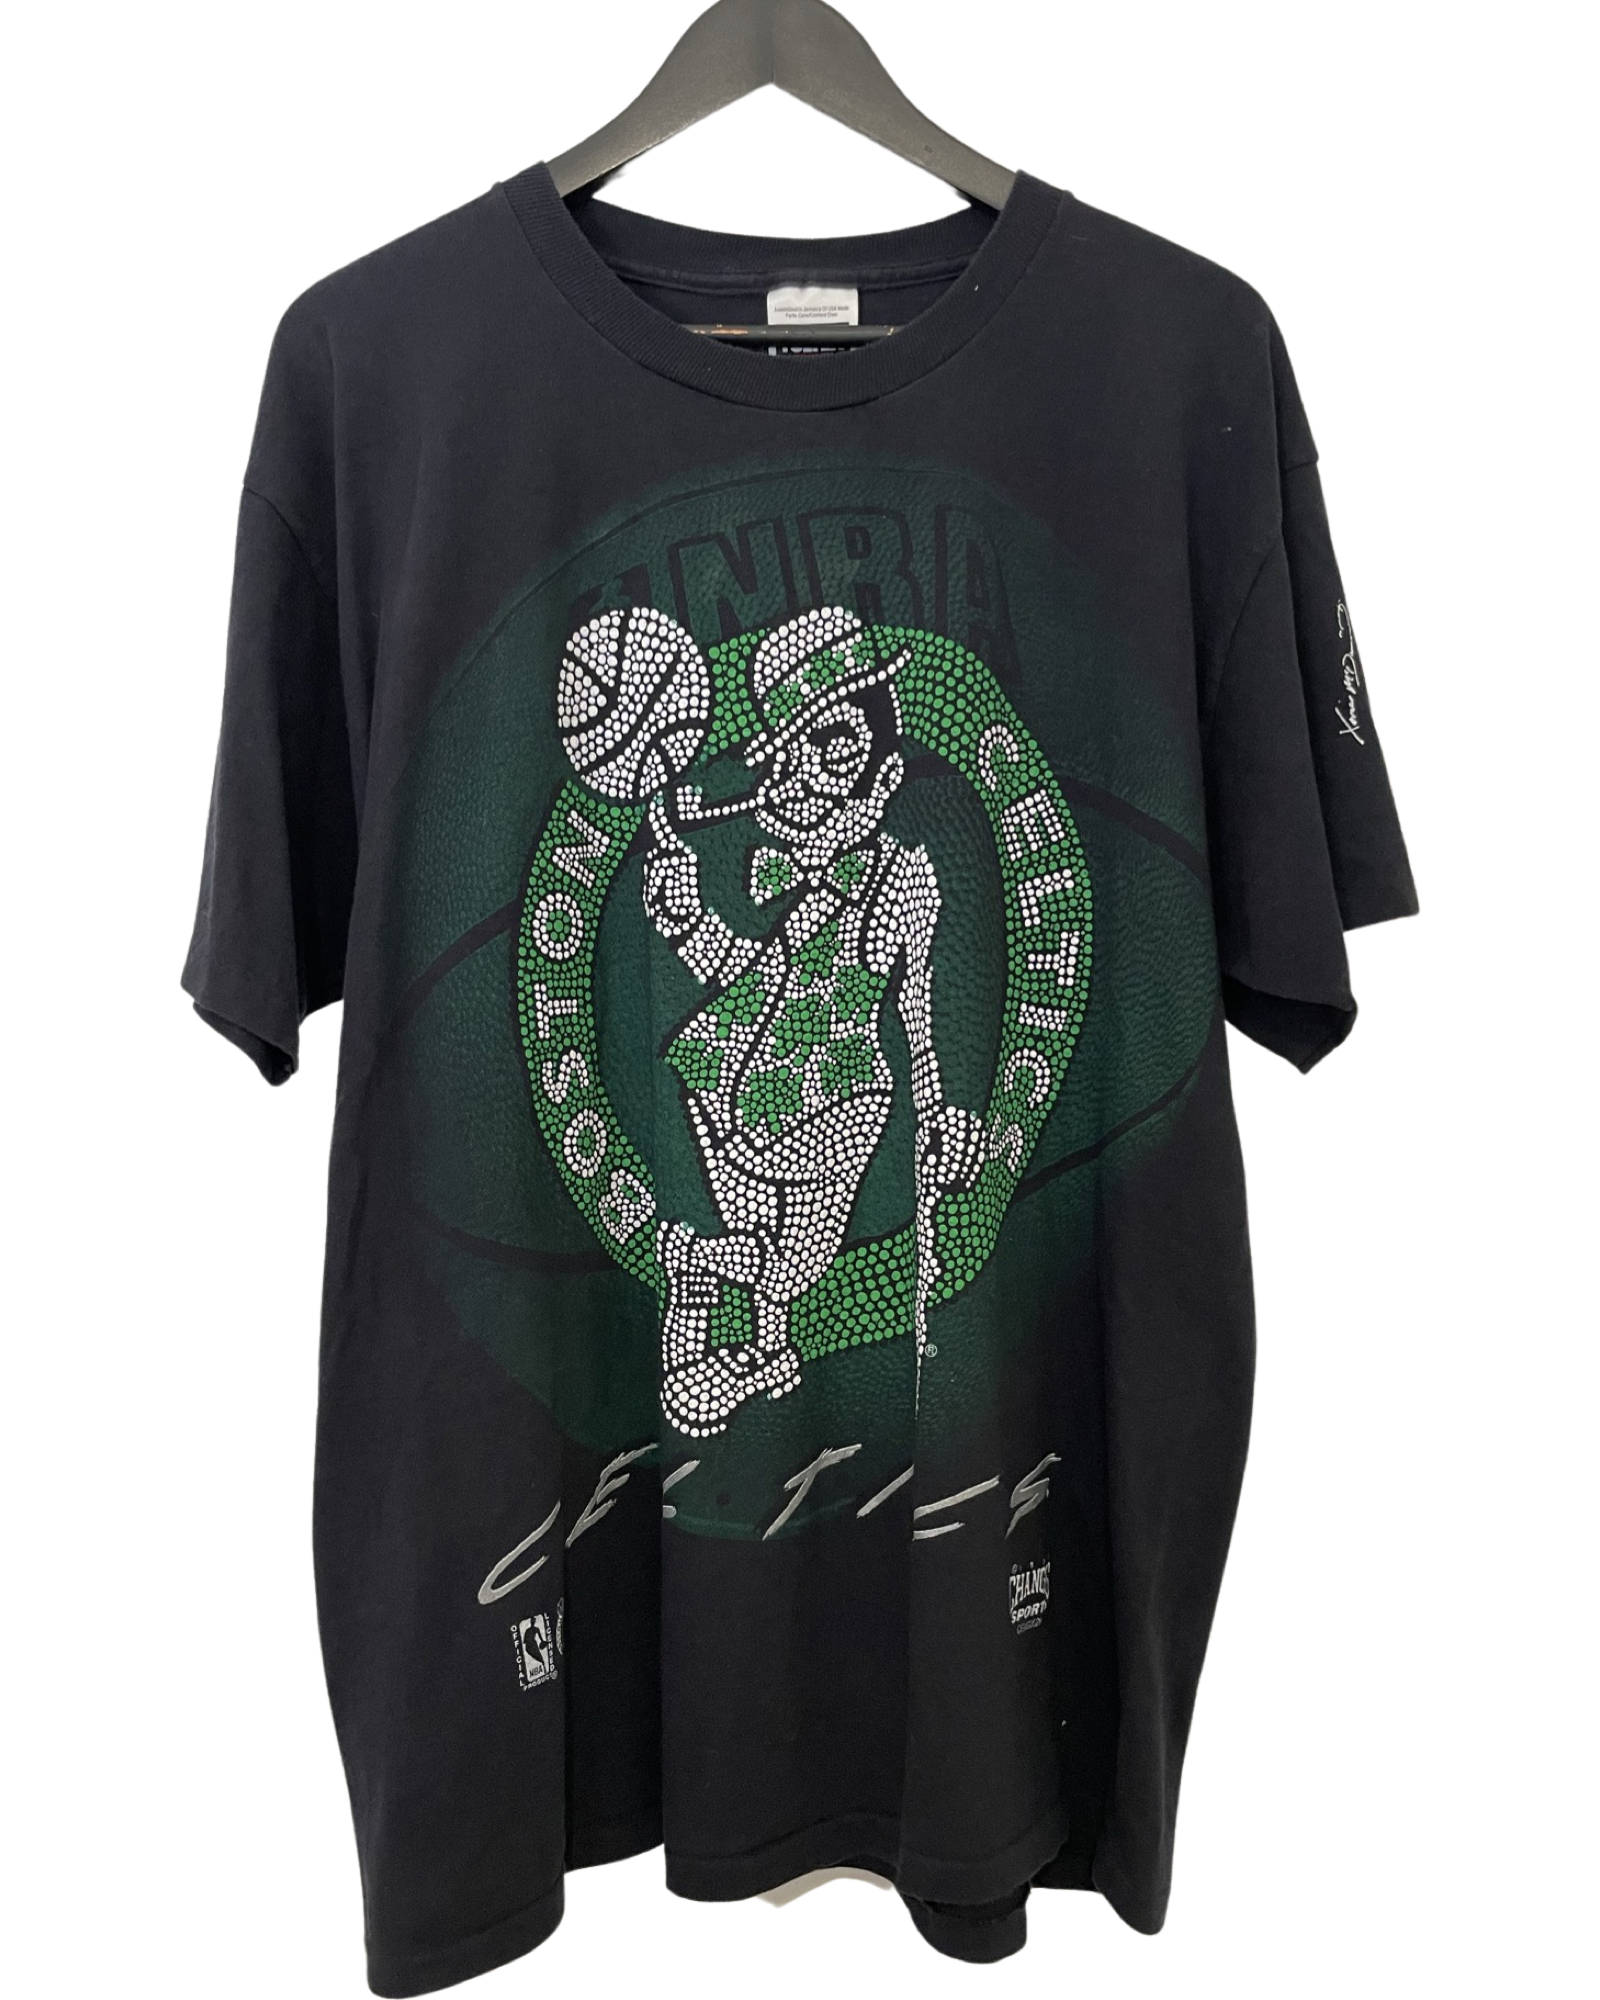 CustomCat Boston Celtics Retro NBA T-Shirt White / XL